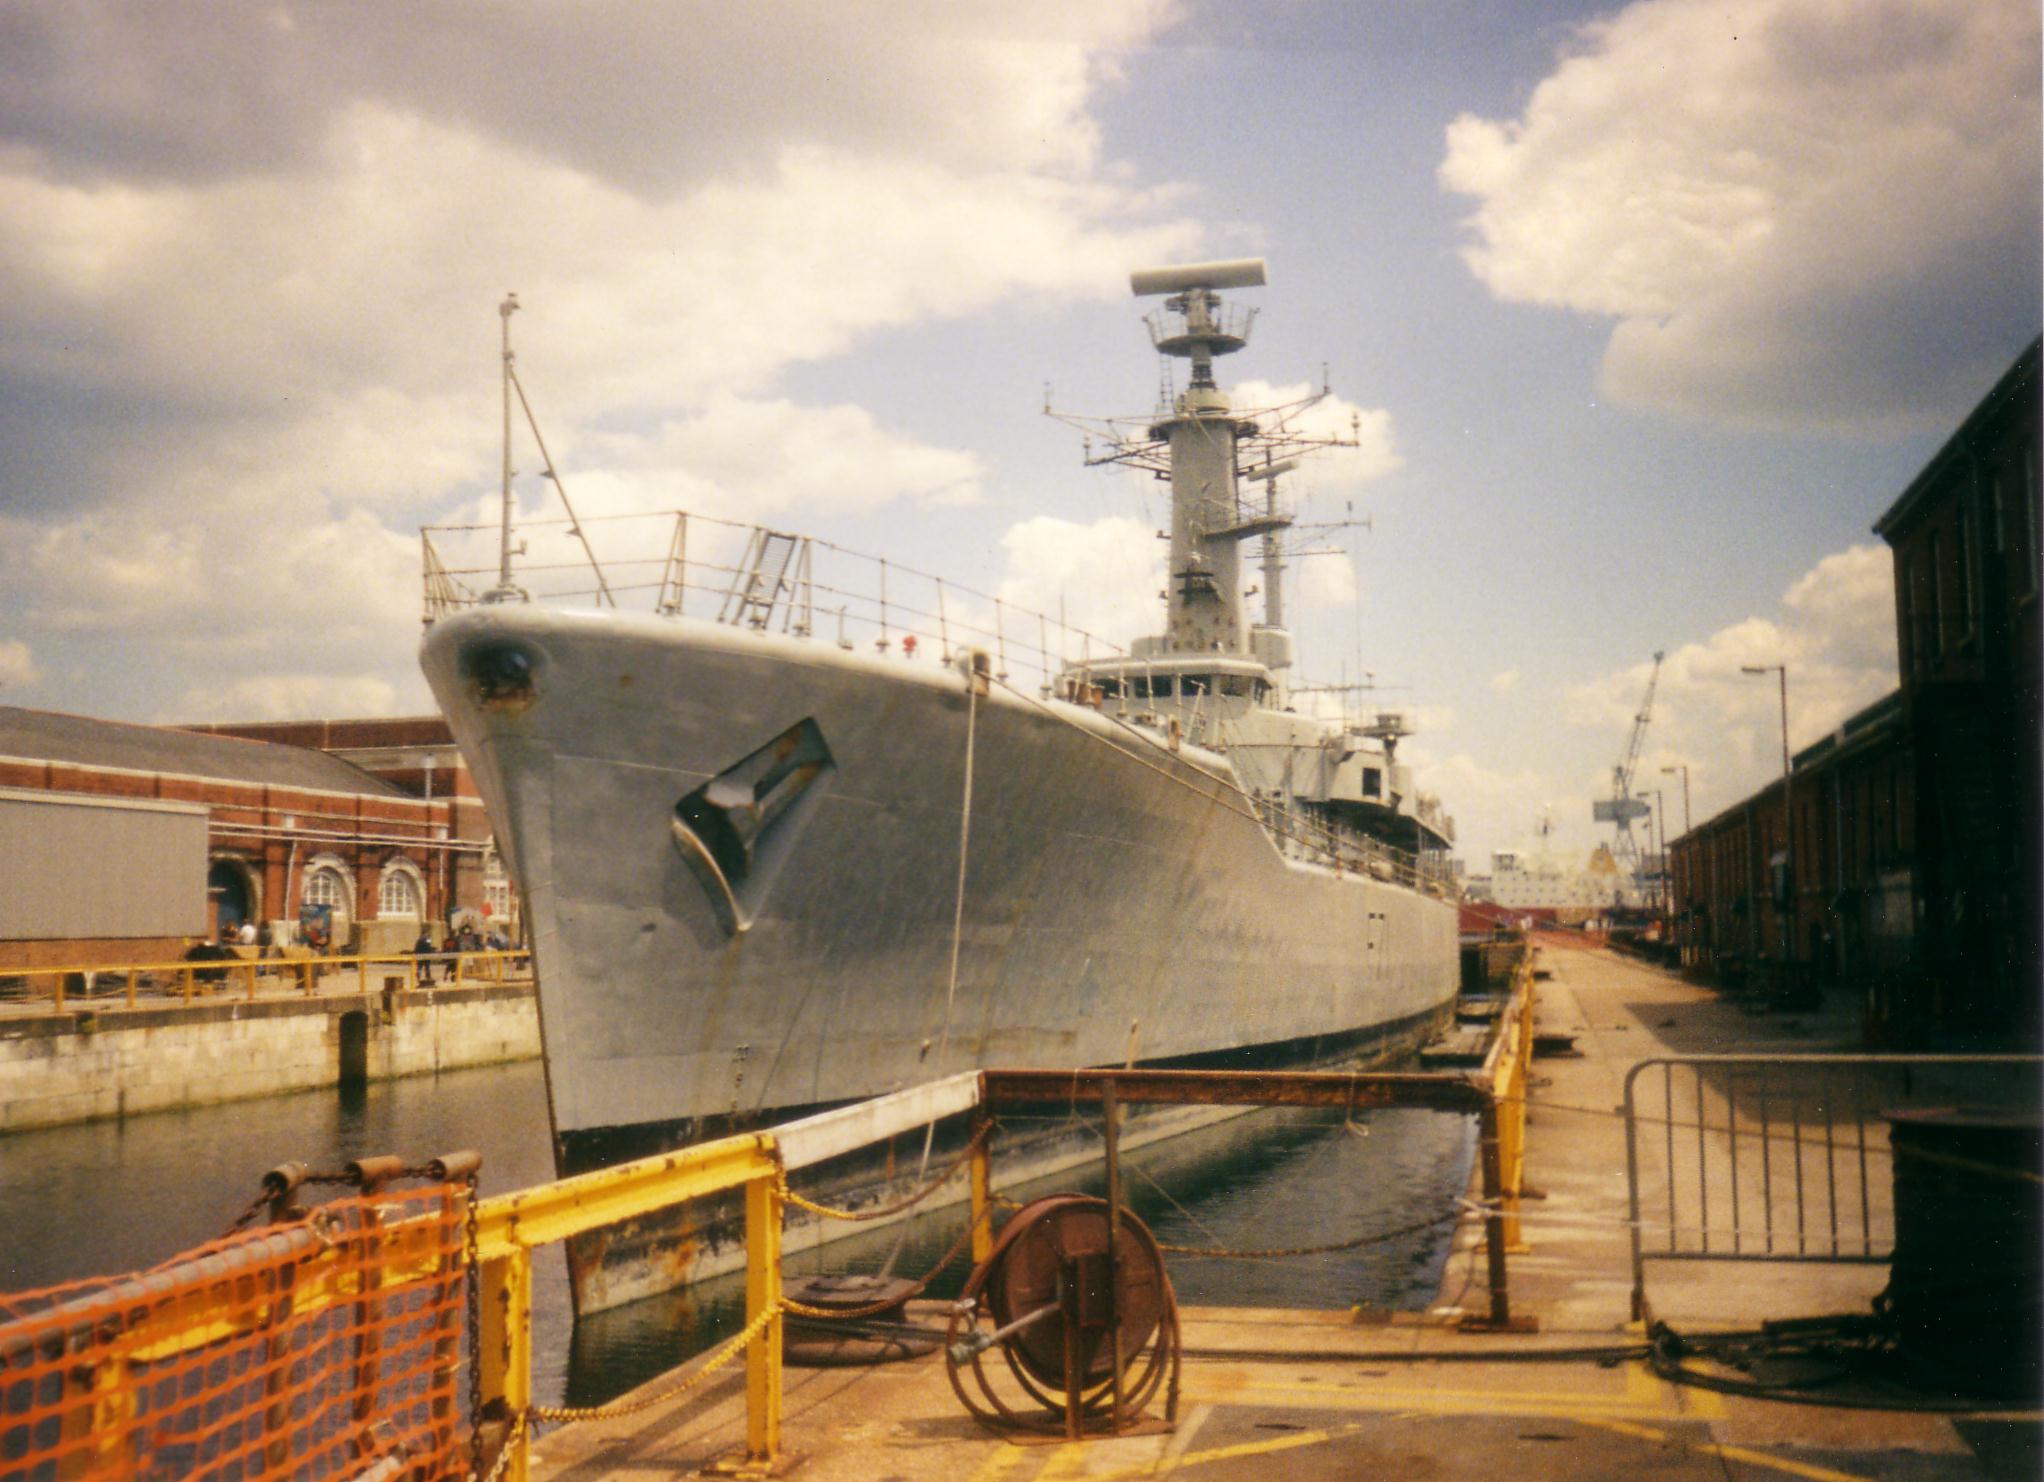 HMS Scylla F71